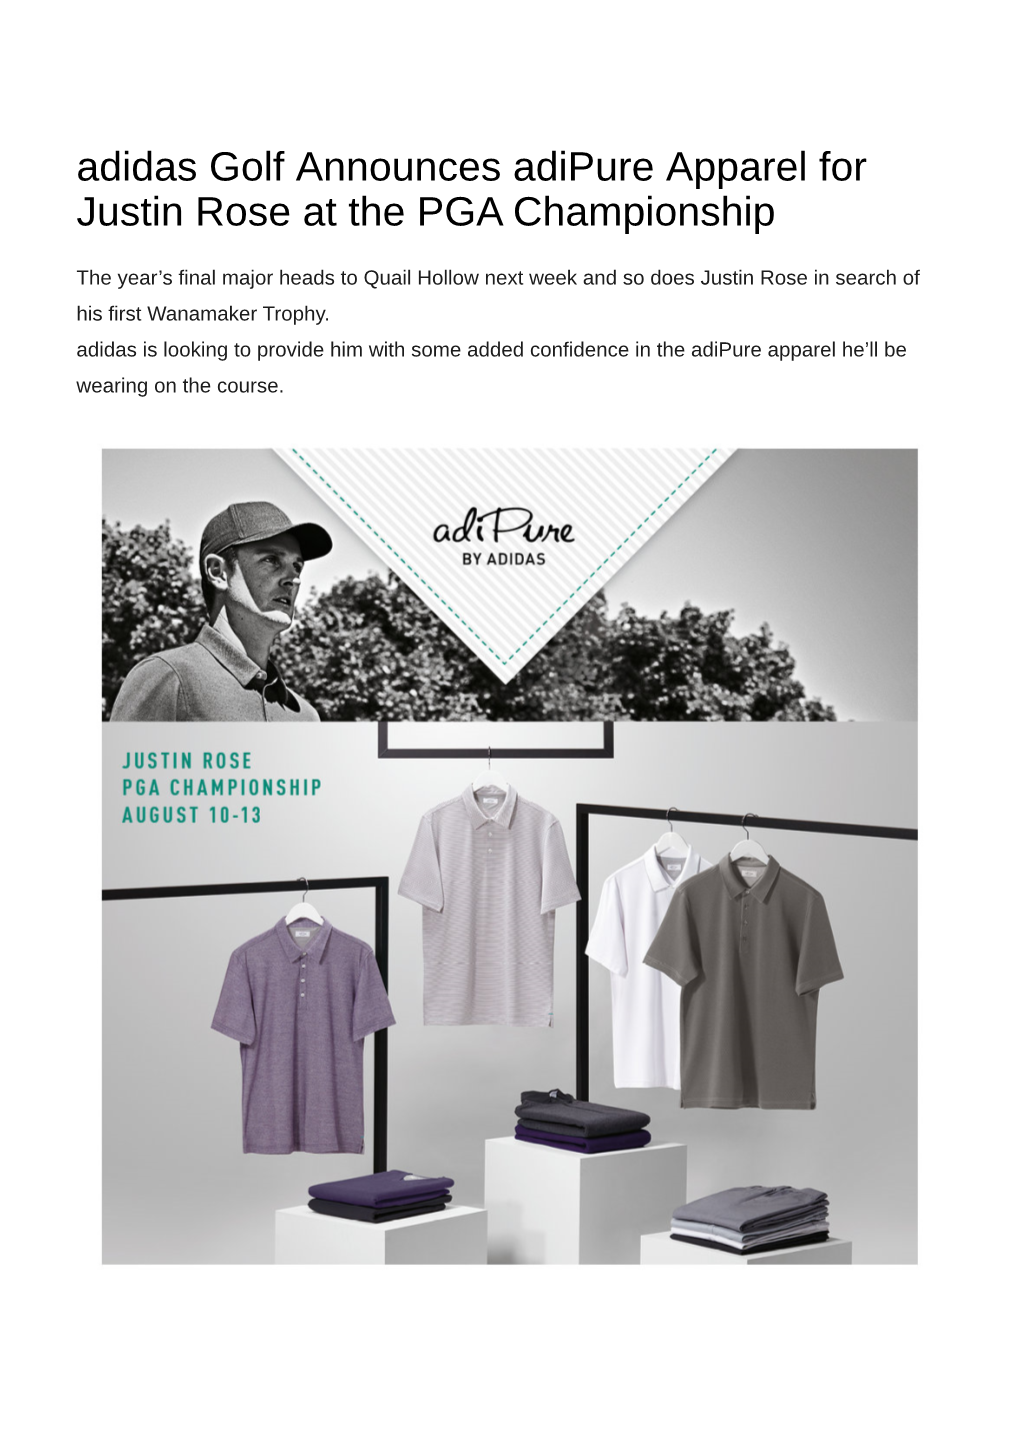 Adidas Golf Announces Adipure Apparel for Justin Rose at the PGA Championship